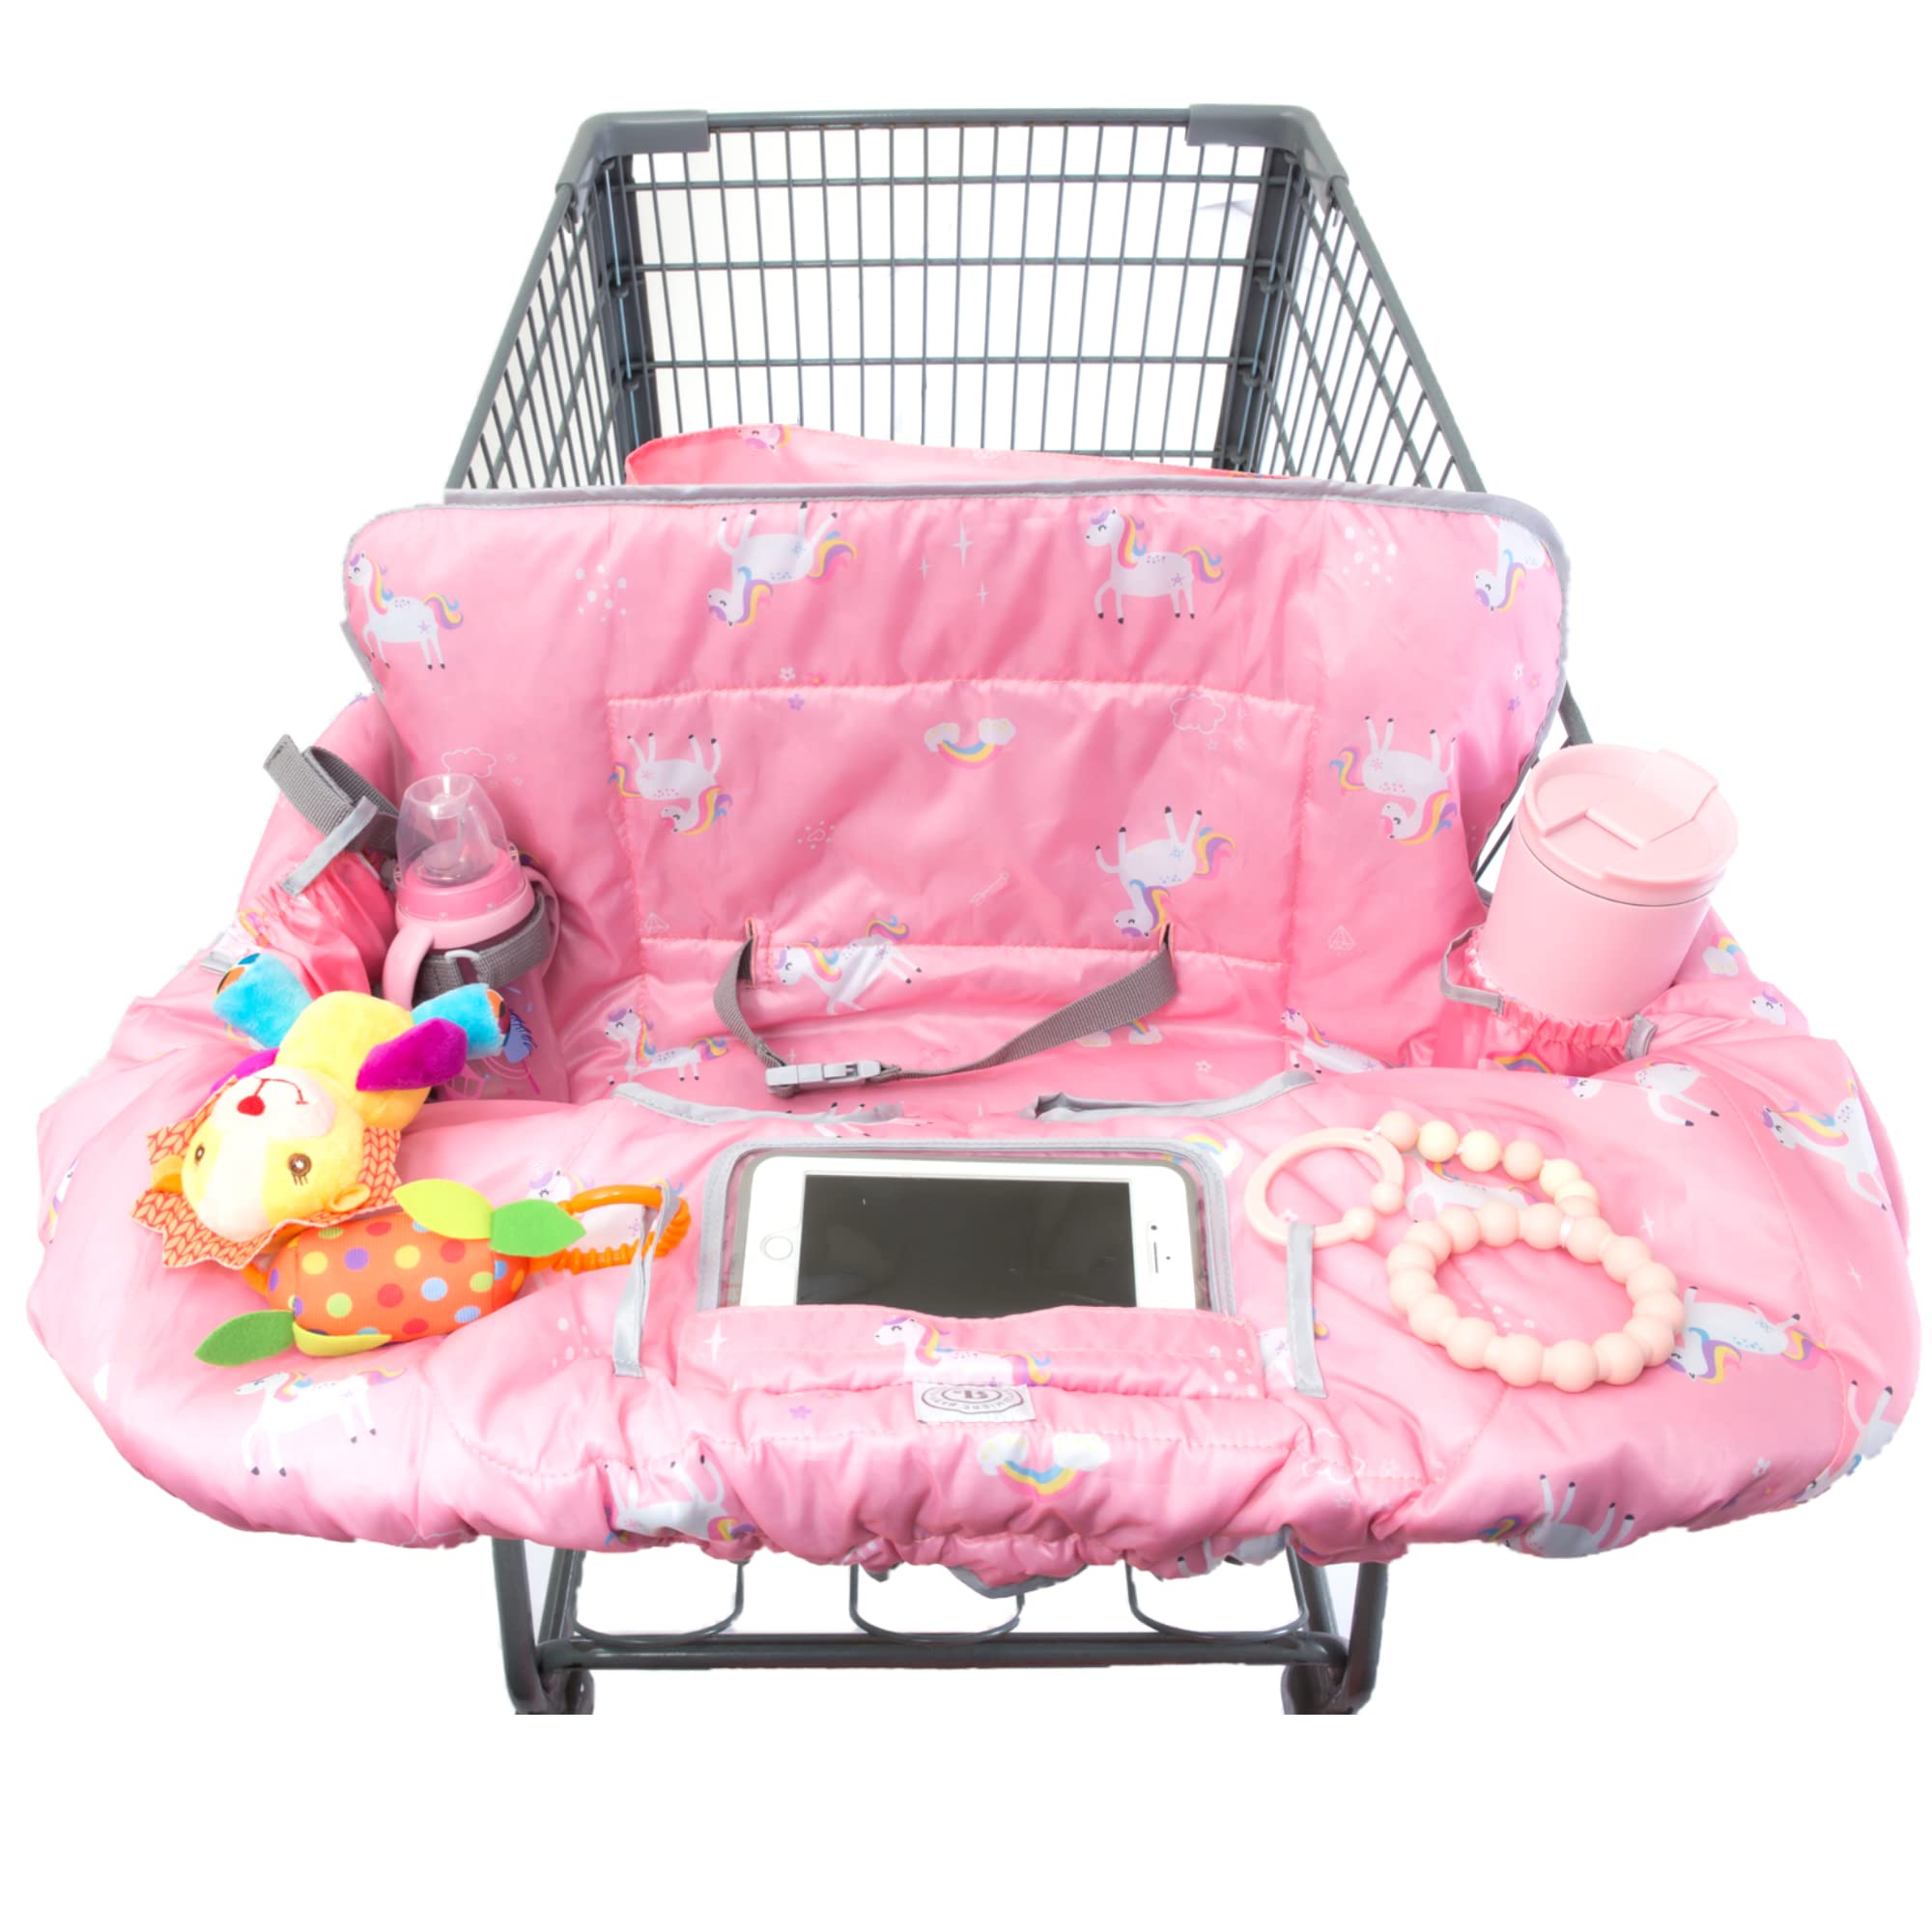 Lumiere - Fundas para carrito de compras para bebé niña (unicornio y arcoíris)